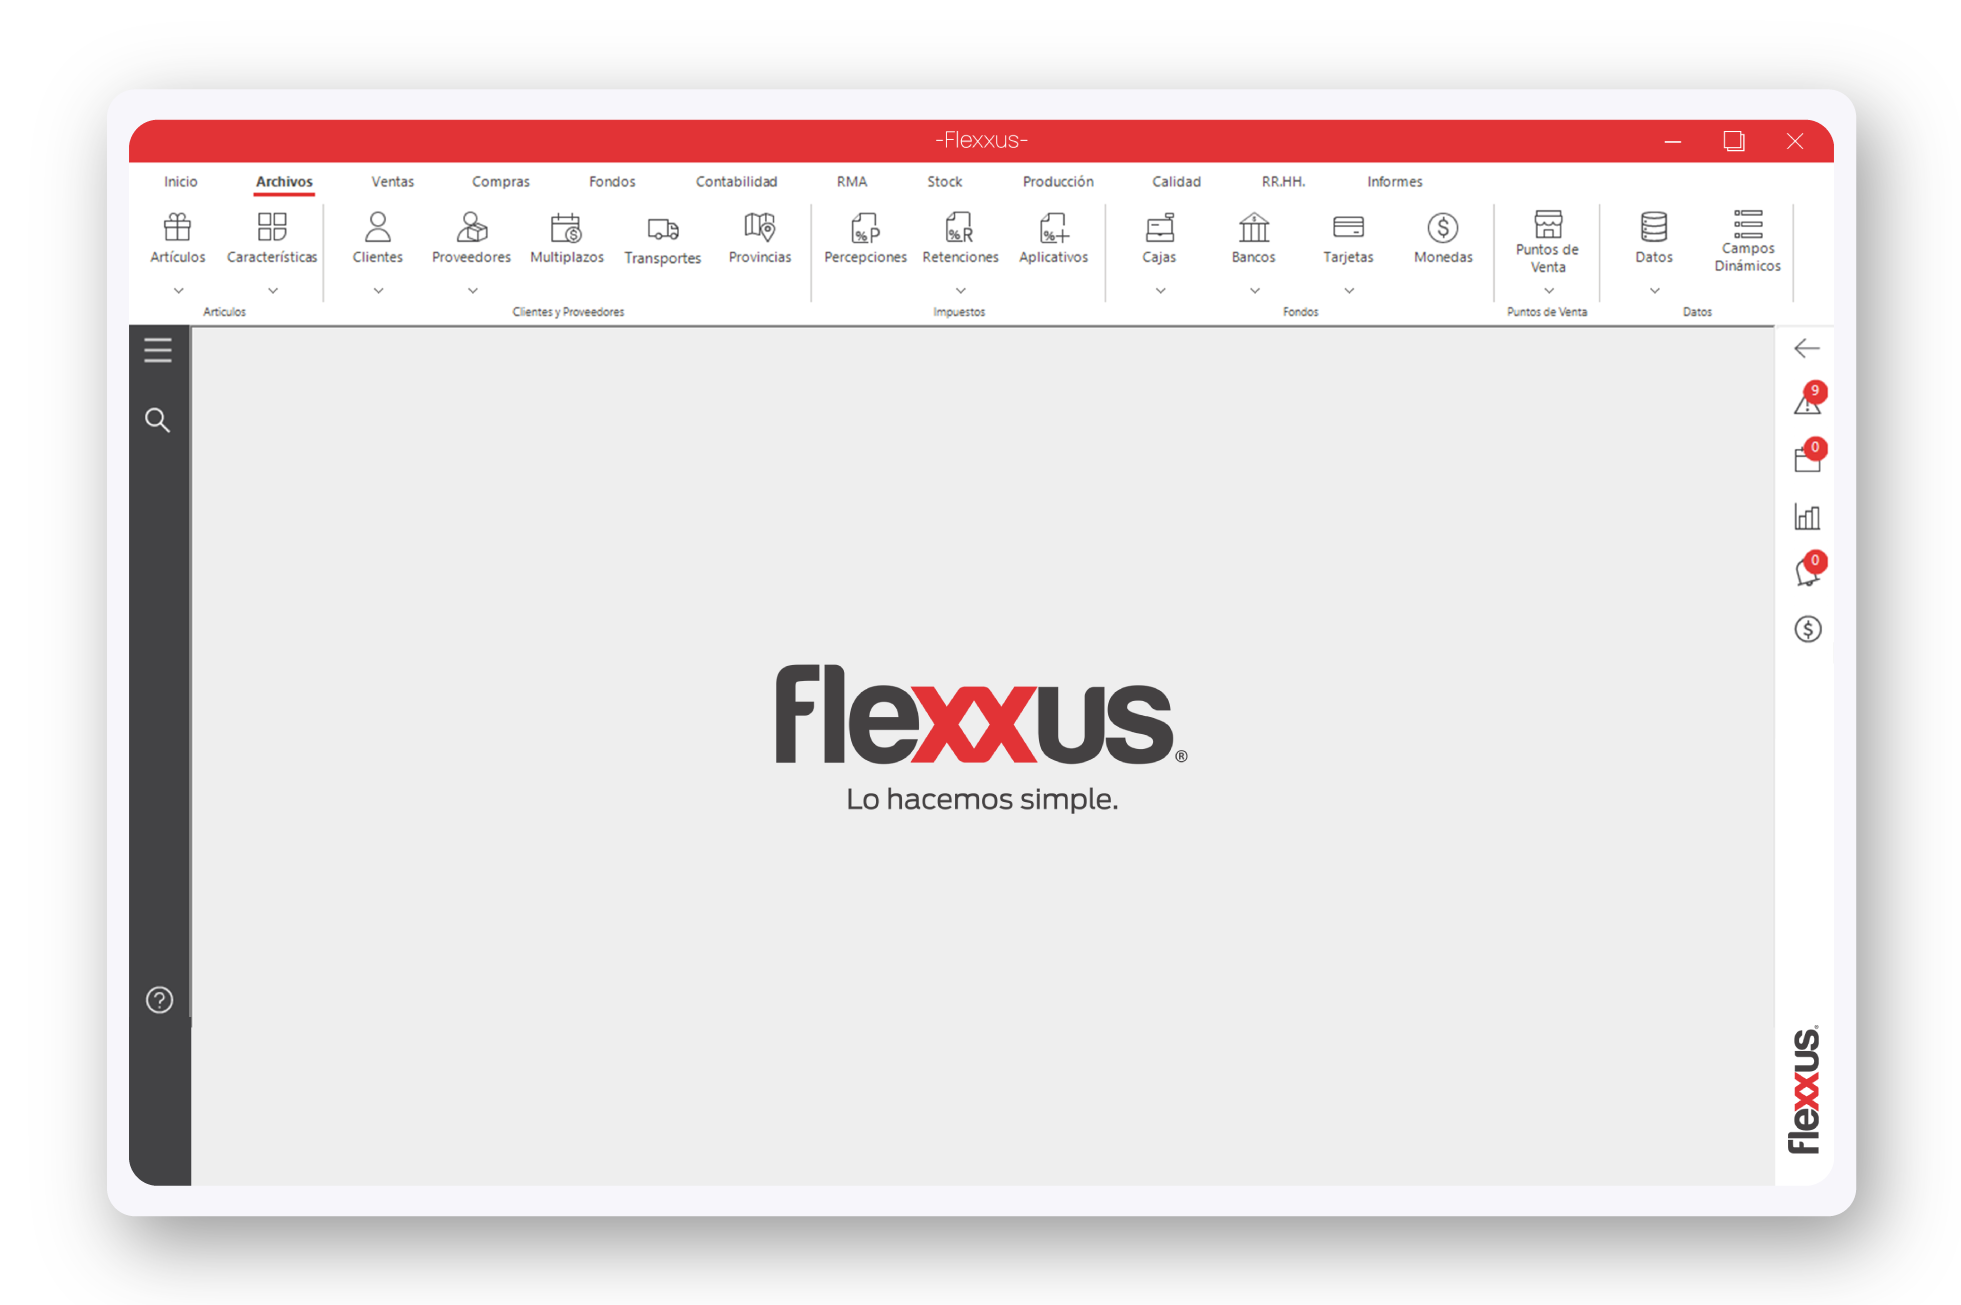 Flexxus%20Enterprise